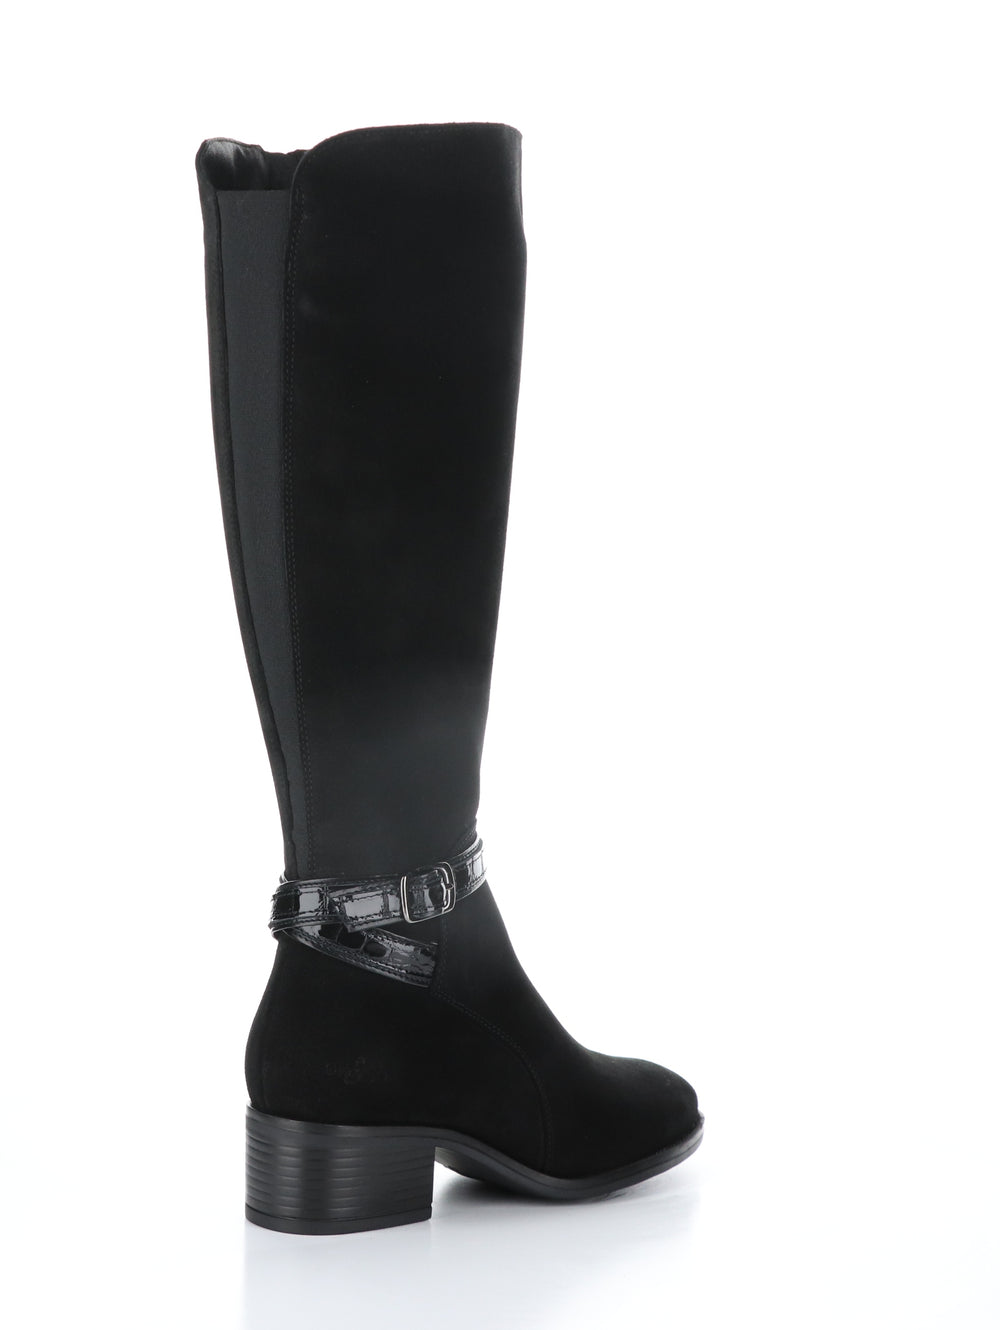 JADE Black Zip Up Boots|JADE Bottes avec Fermeture Zippée in Noir